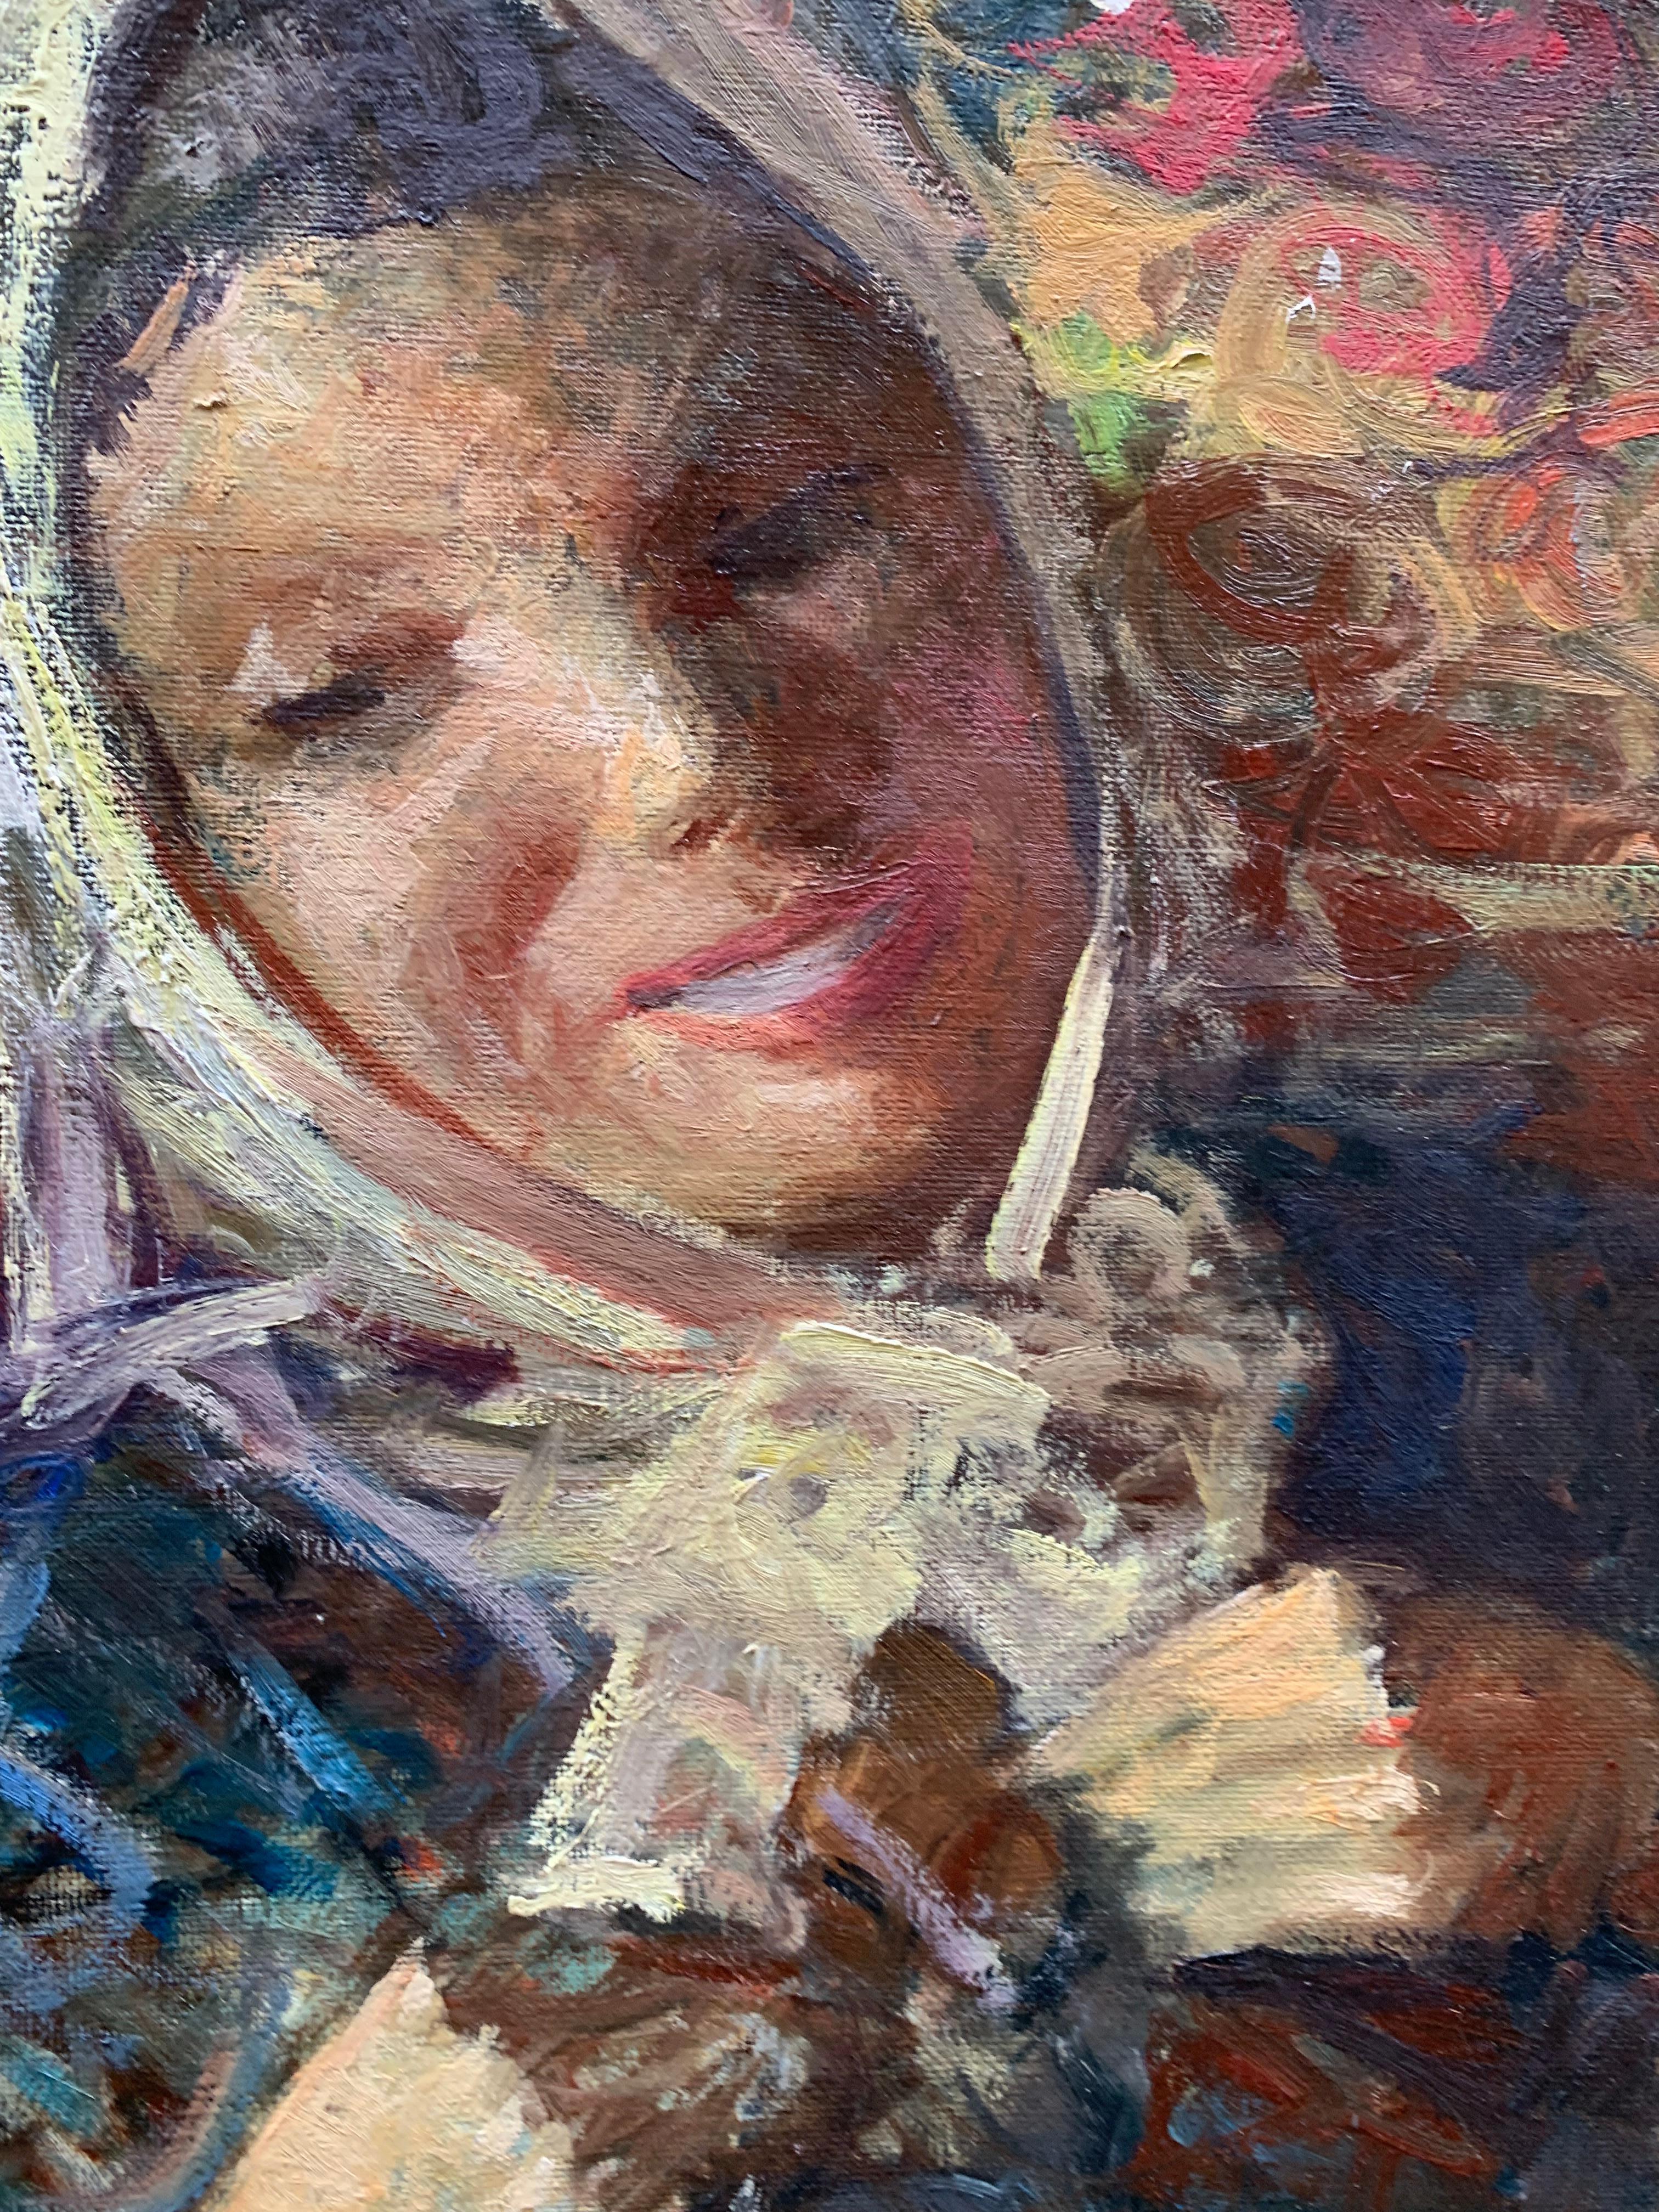 Girl with fruit Le marché. Année 1958. Signé Sergio Cirno Bissi (1902 - 1987)  - Post-impressionnisme Painting par Sergio Cirni Bissi